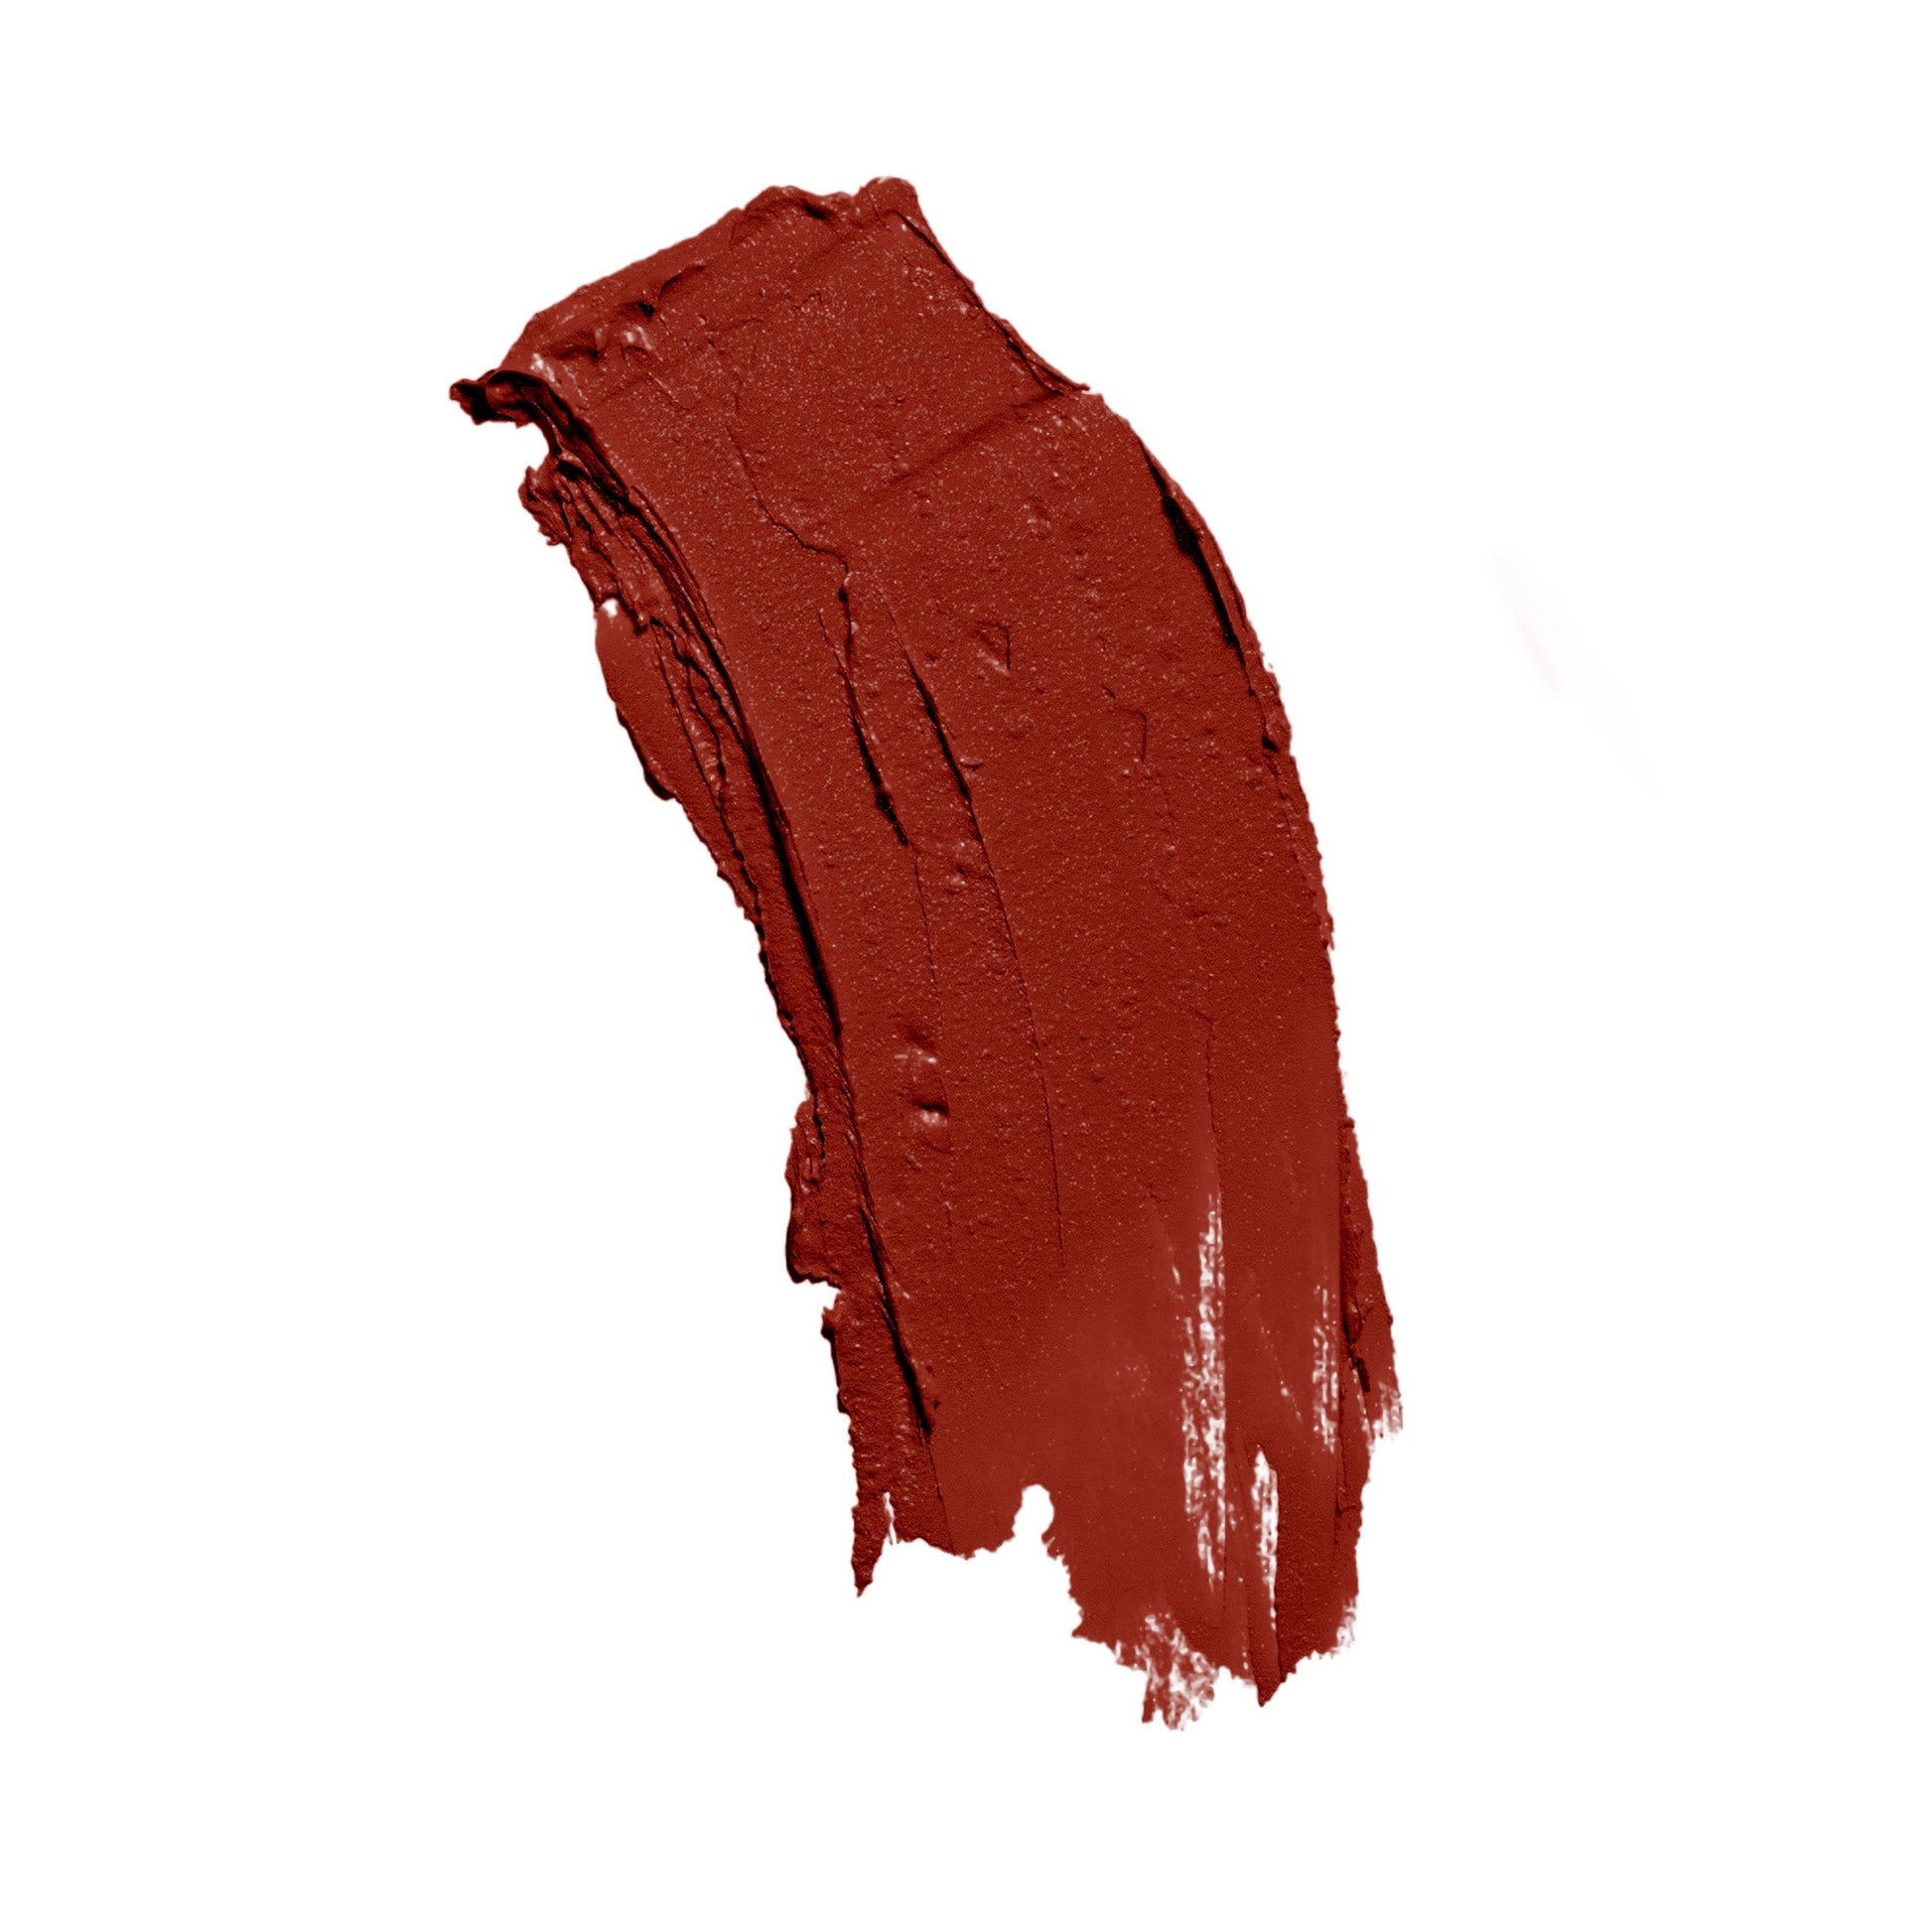 Bold dark red satin lipstick featured on a pure white background